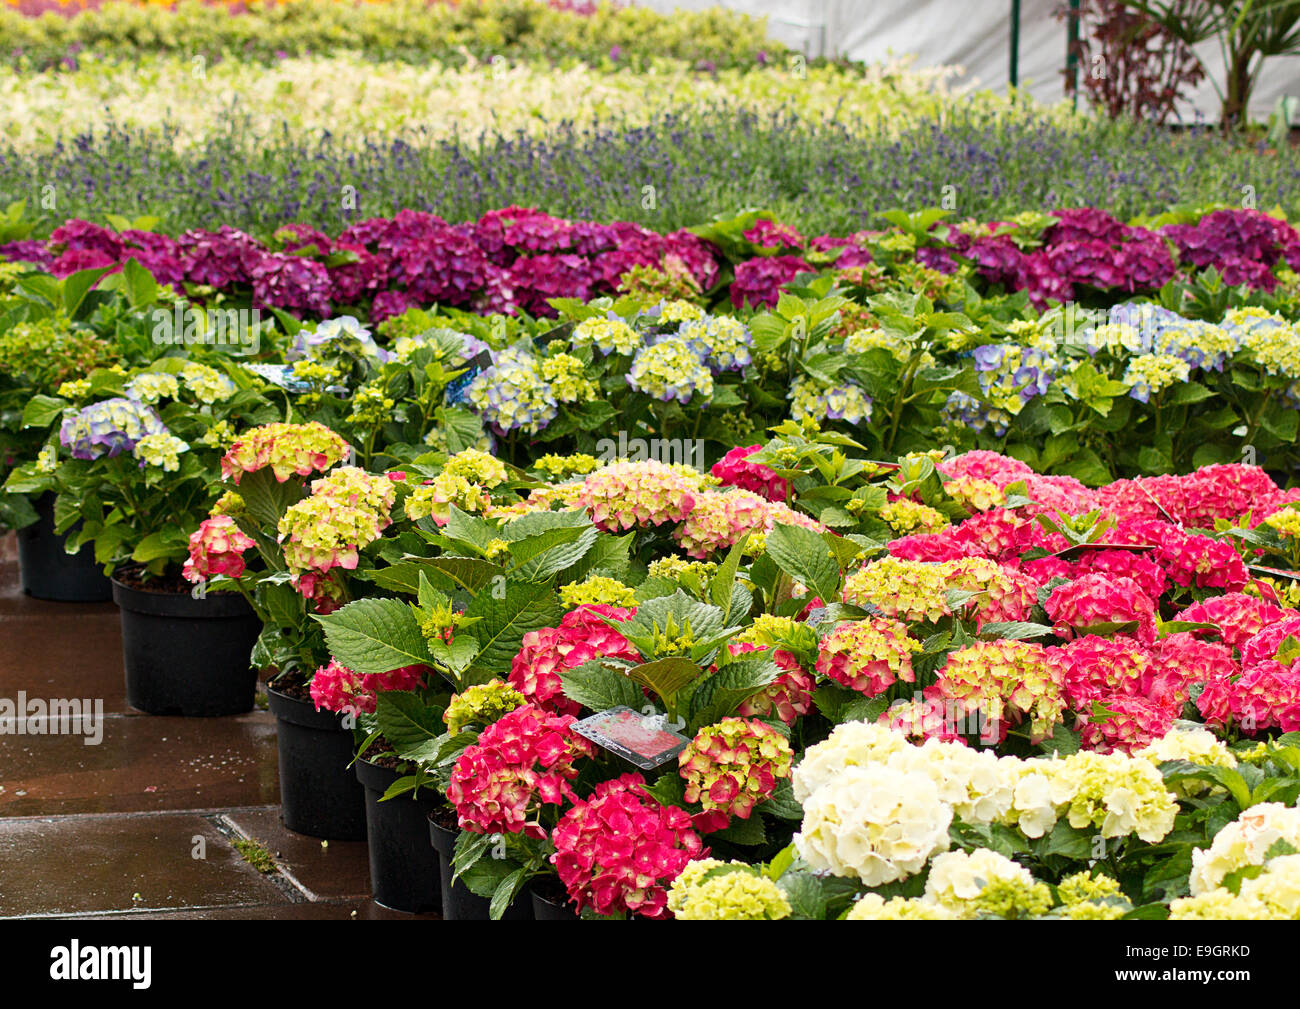 Rows of flowers for sale at a retail garden center, nursery or market garden. Stock Photo